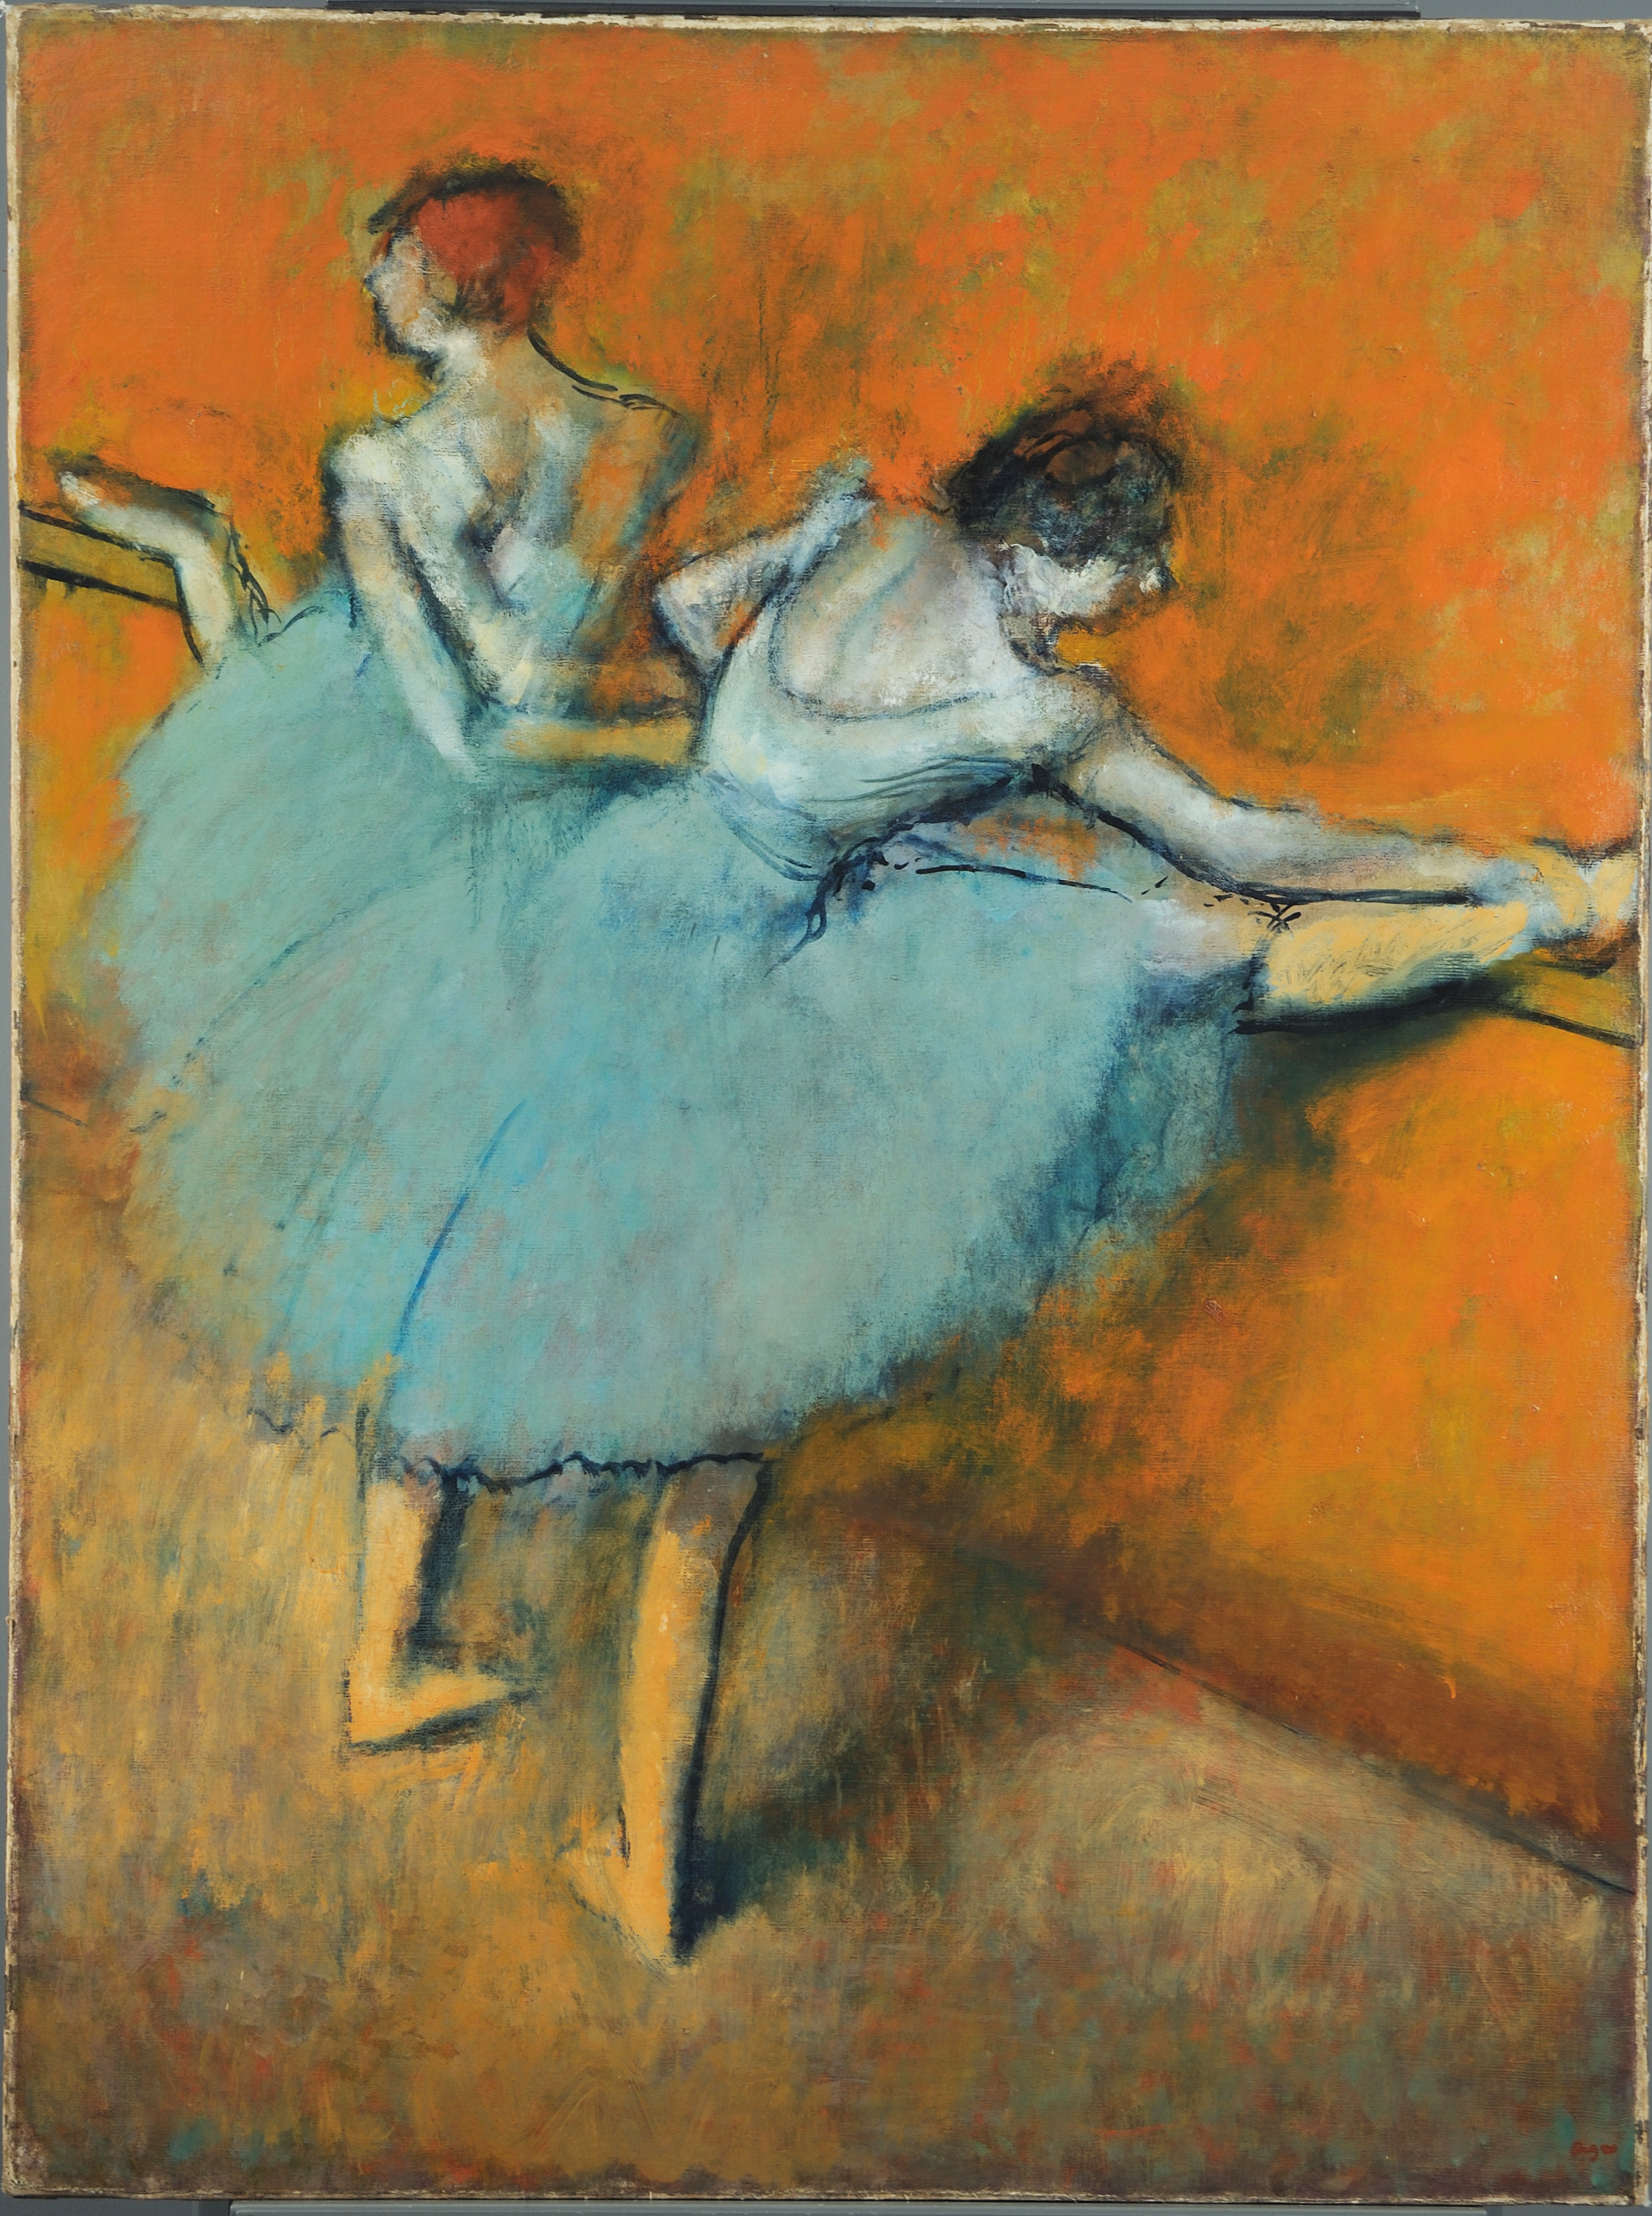 رقصندگان در کنارِ میلۀ تمرین by Edgar Degas - 1900 - 51 1/4 x 38 1/2 in 